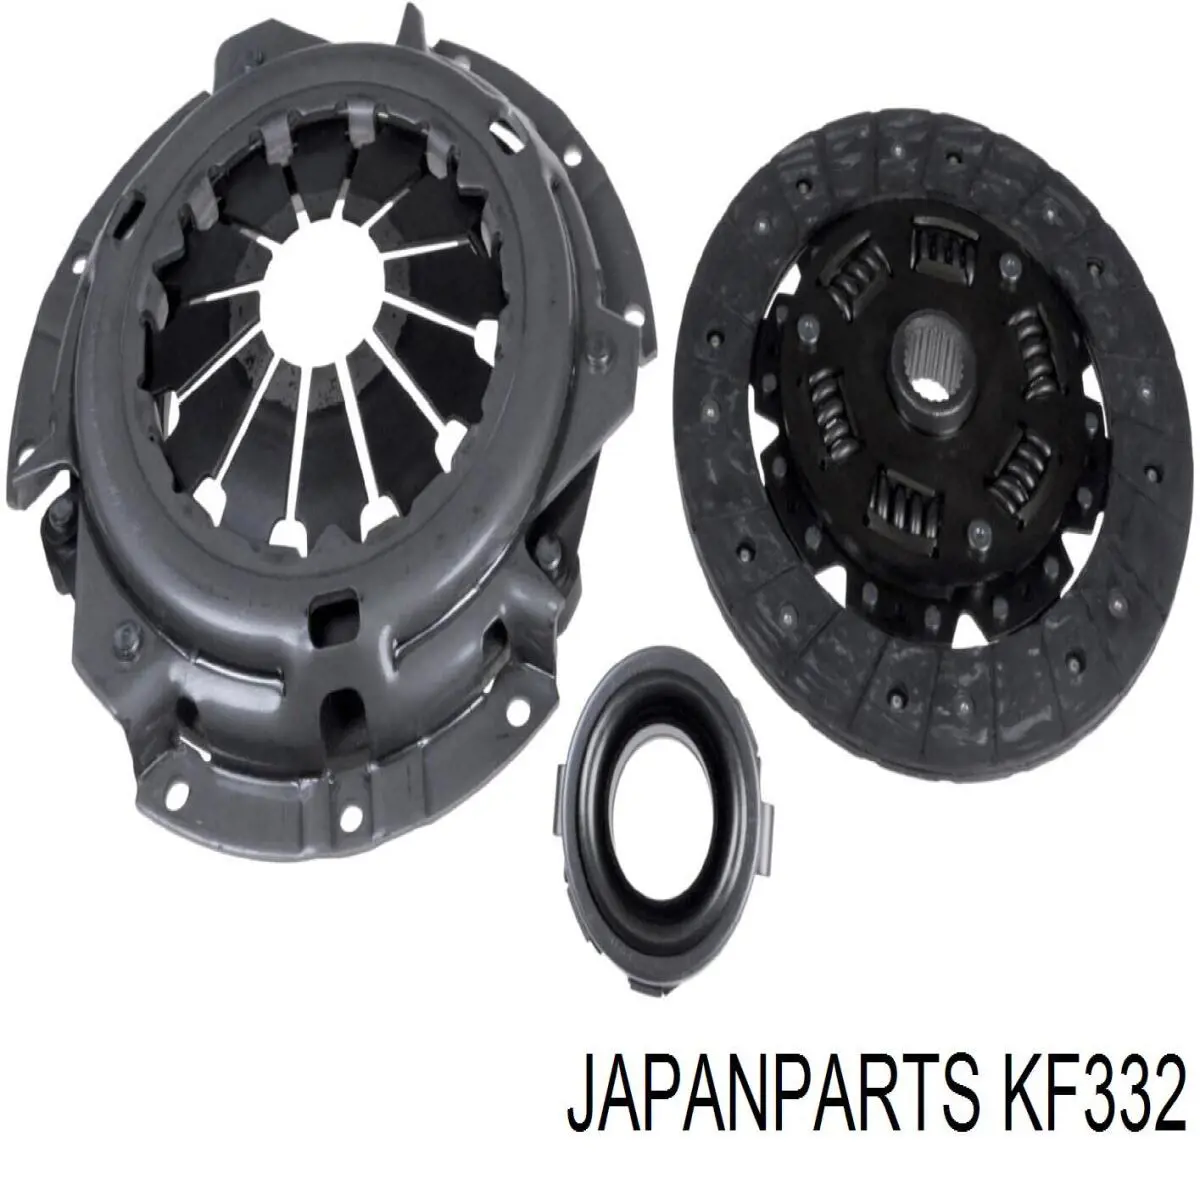 KF332 Japan Parts embrague